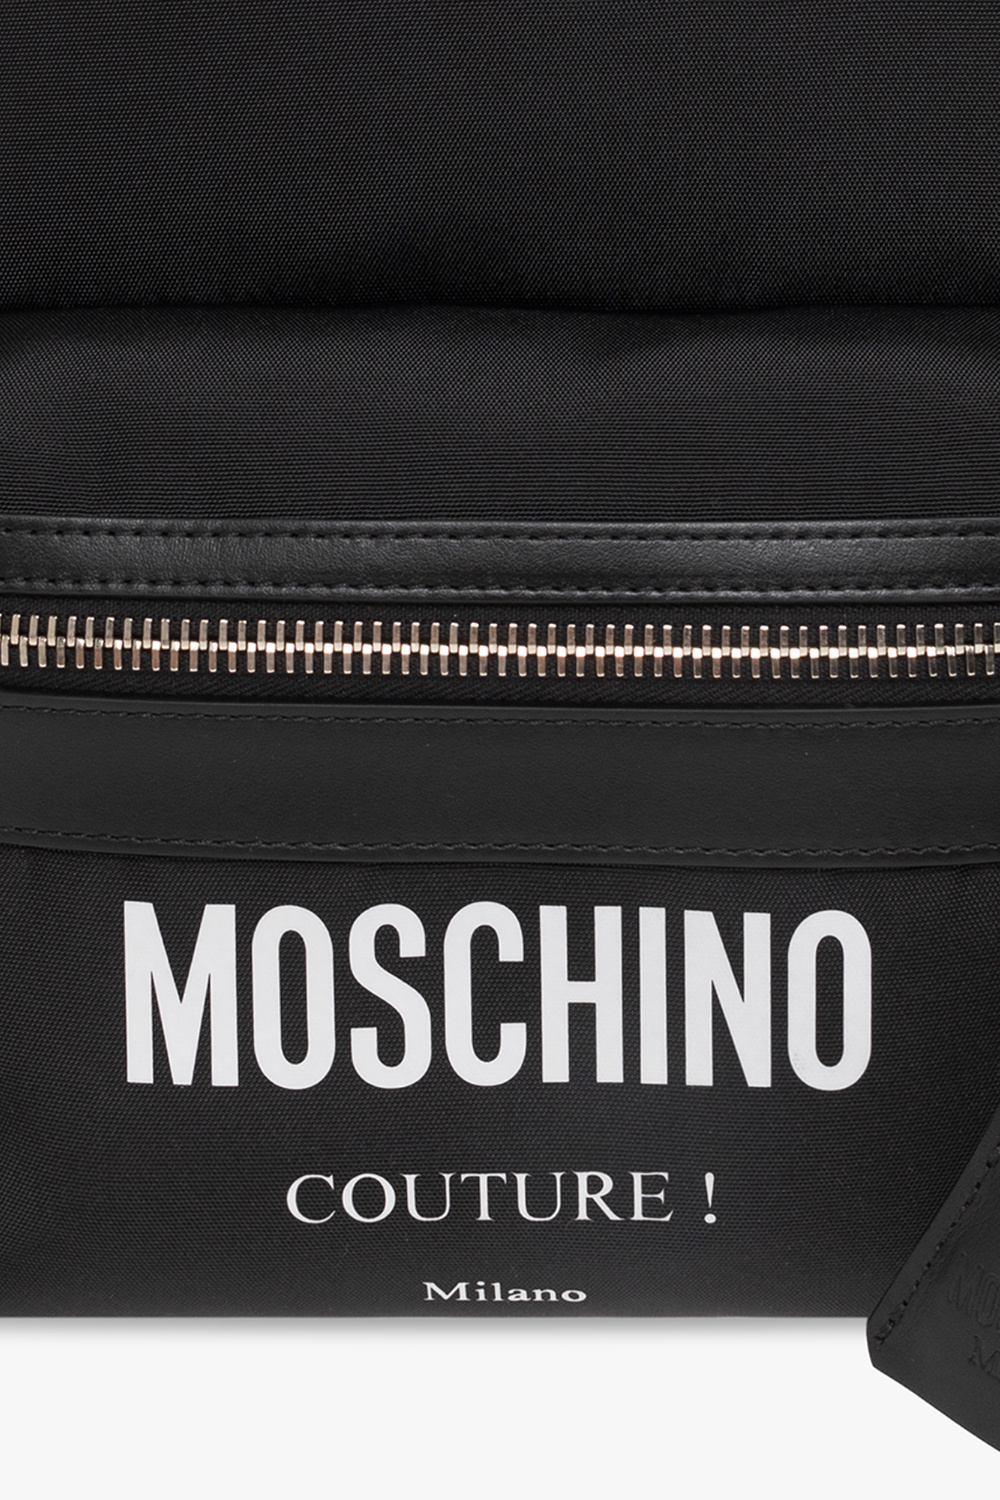 Moschino Geantă BILLABONG Essential Bag C9BG15BIP2 Antique White 4409